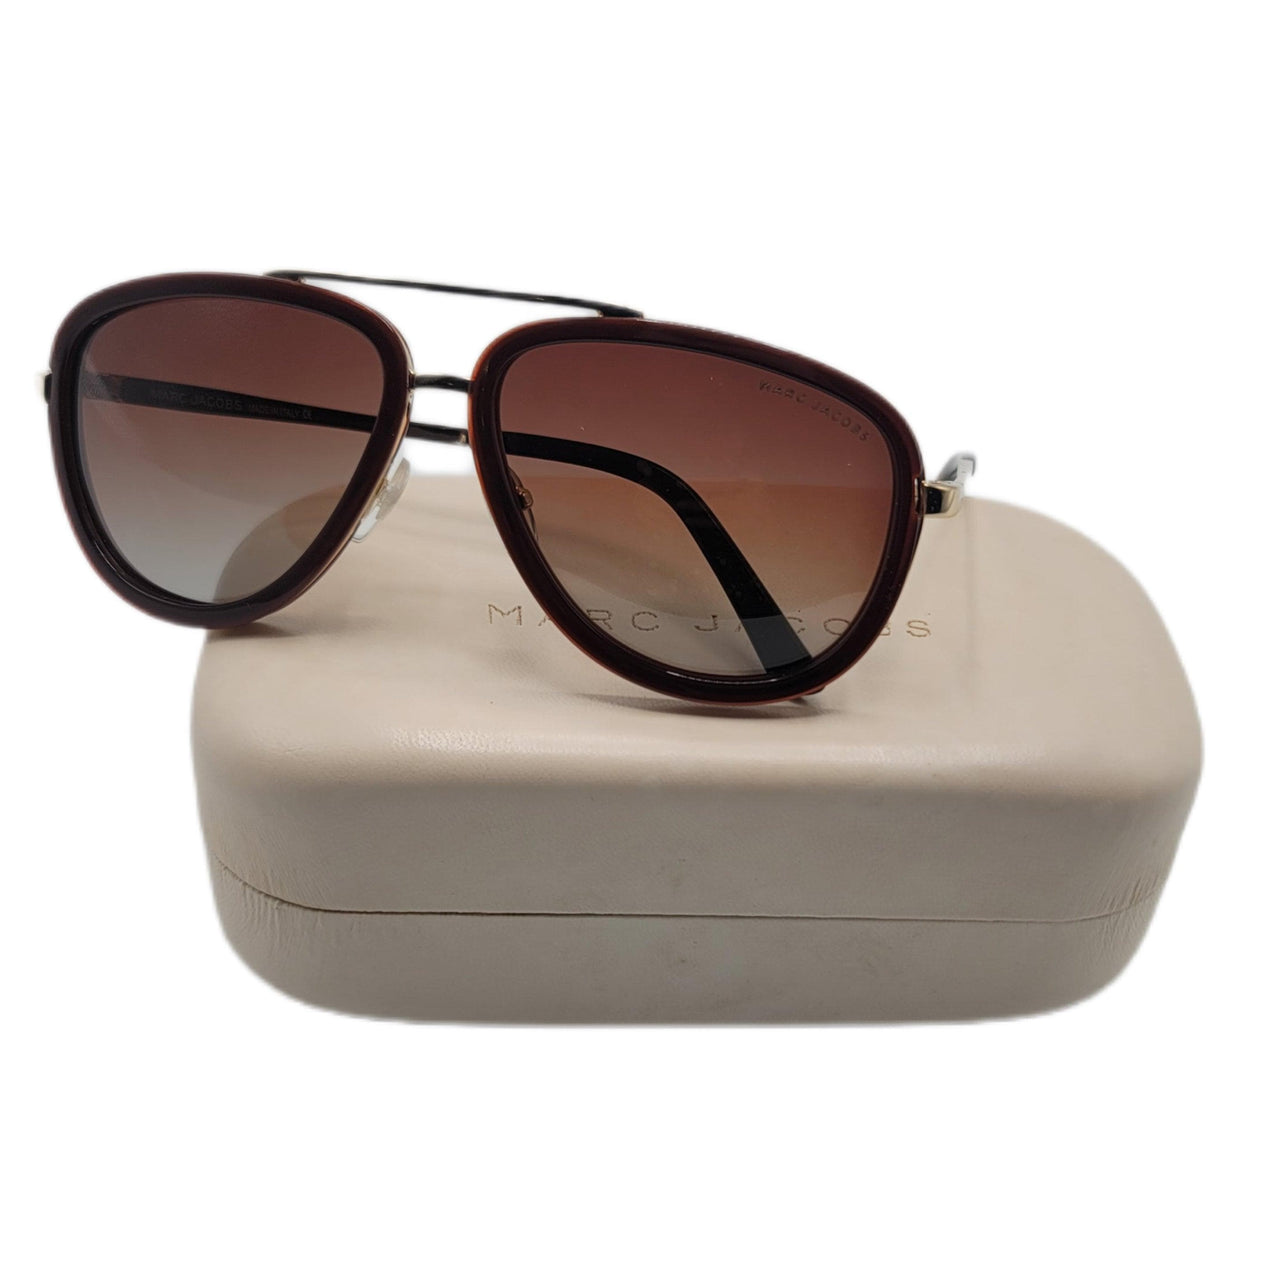 The Bag Couture Sunglasses Marc Jacobs Sunglasses 2